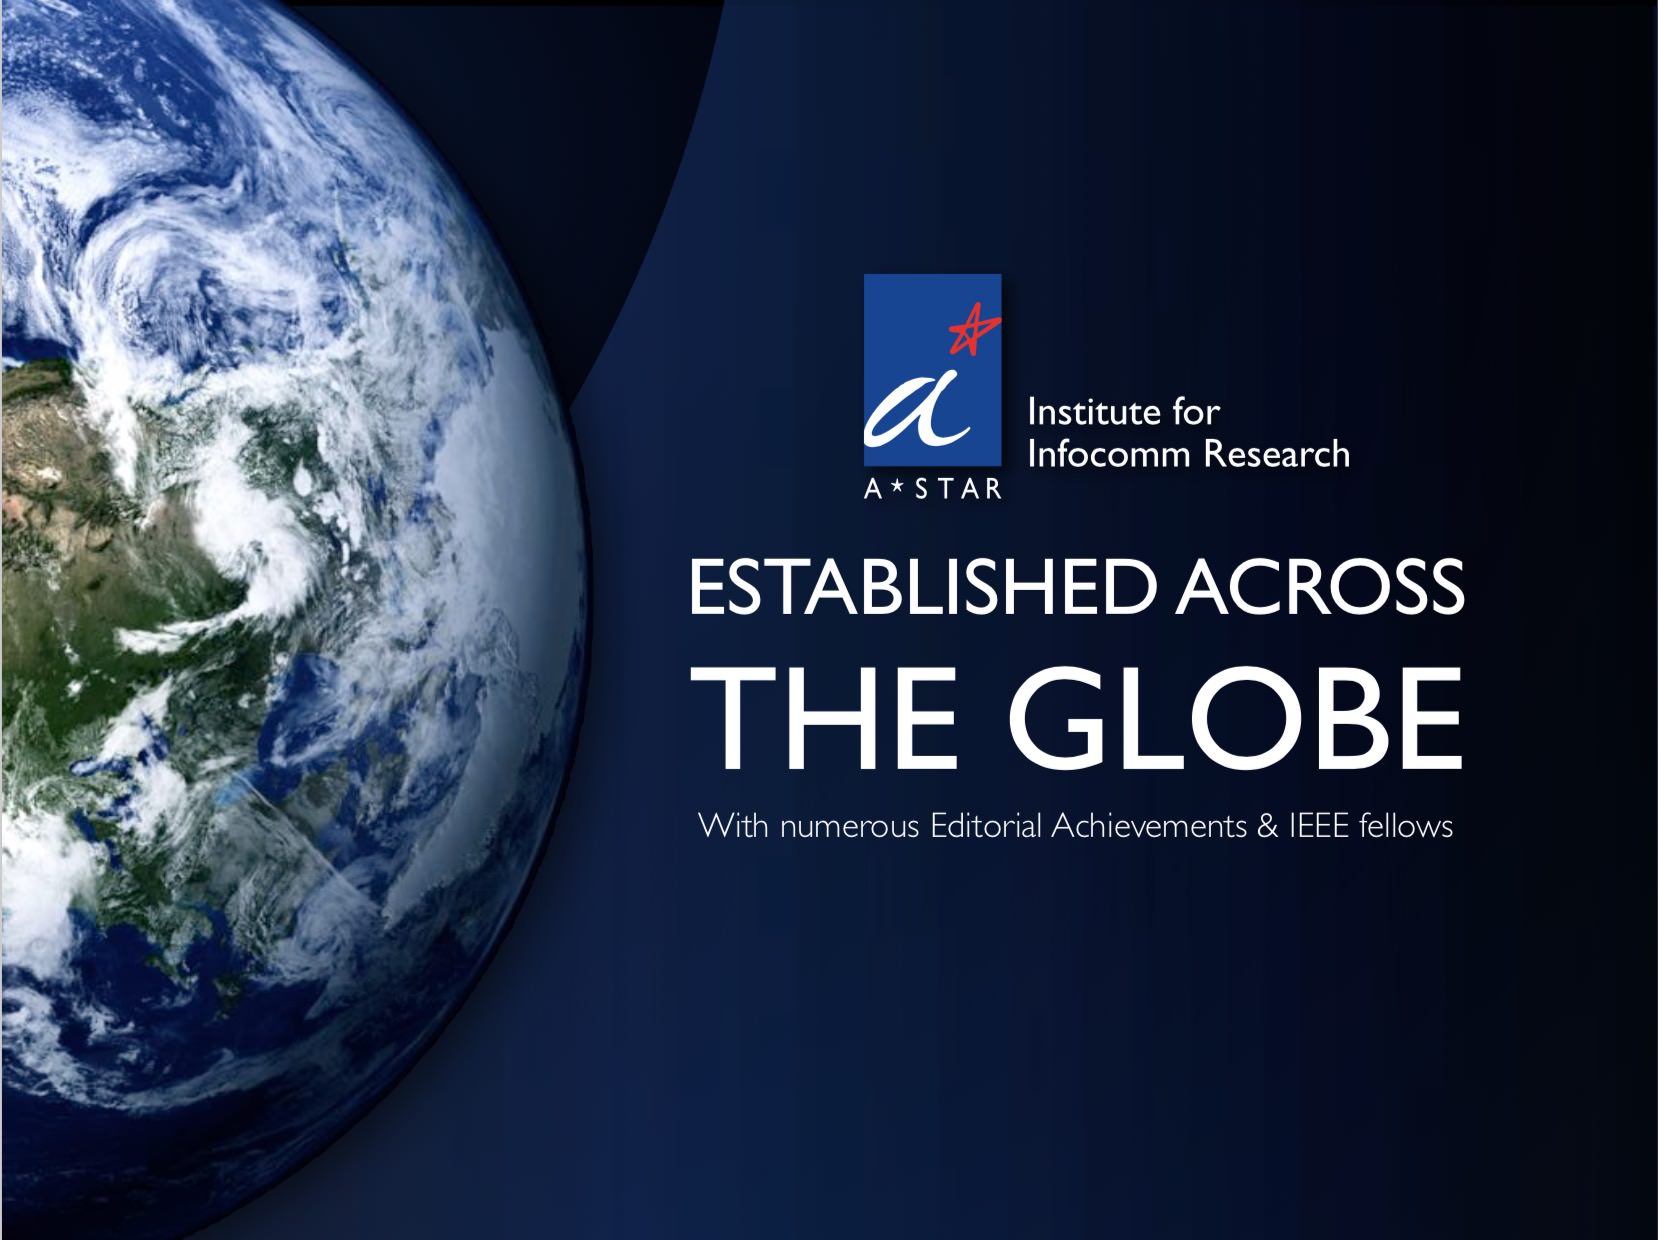 Astar case study slide highspark presentation 4 globe